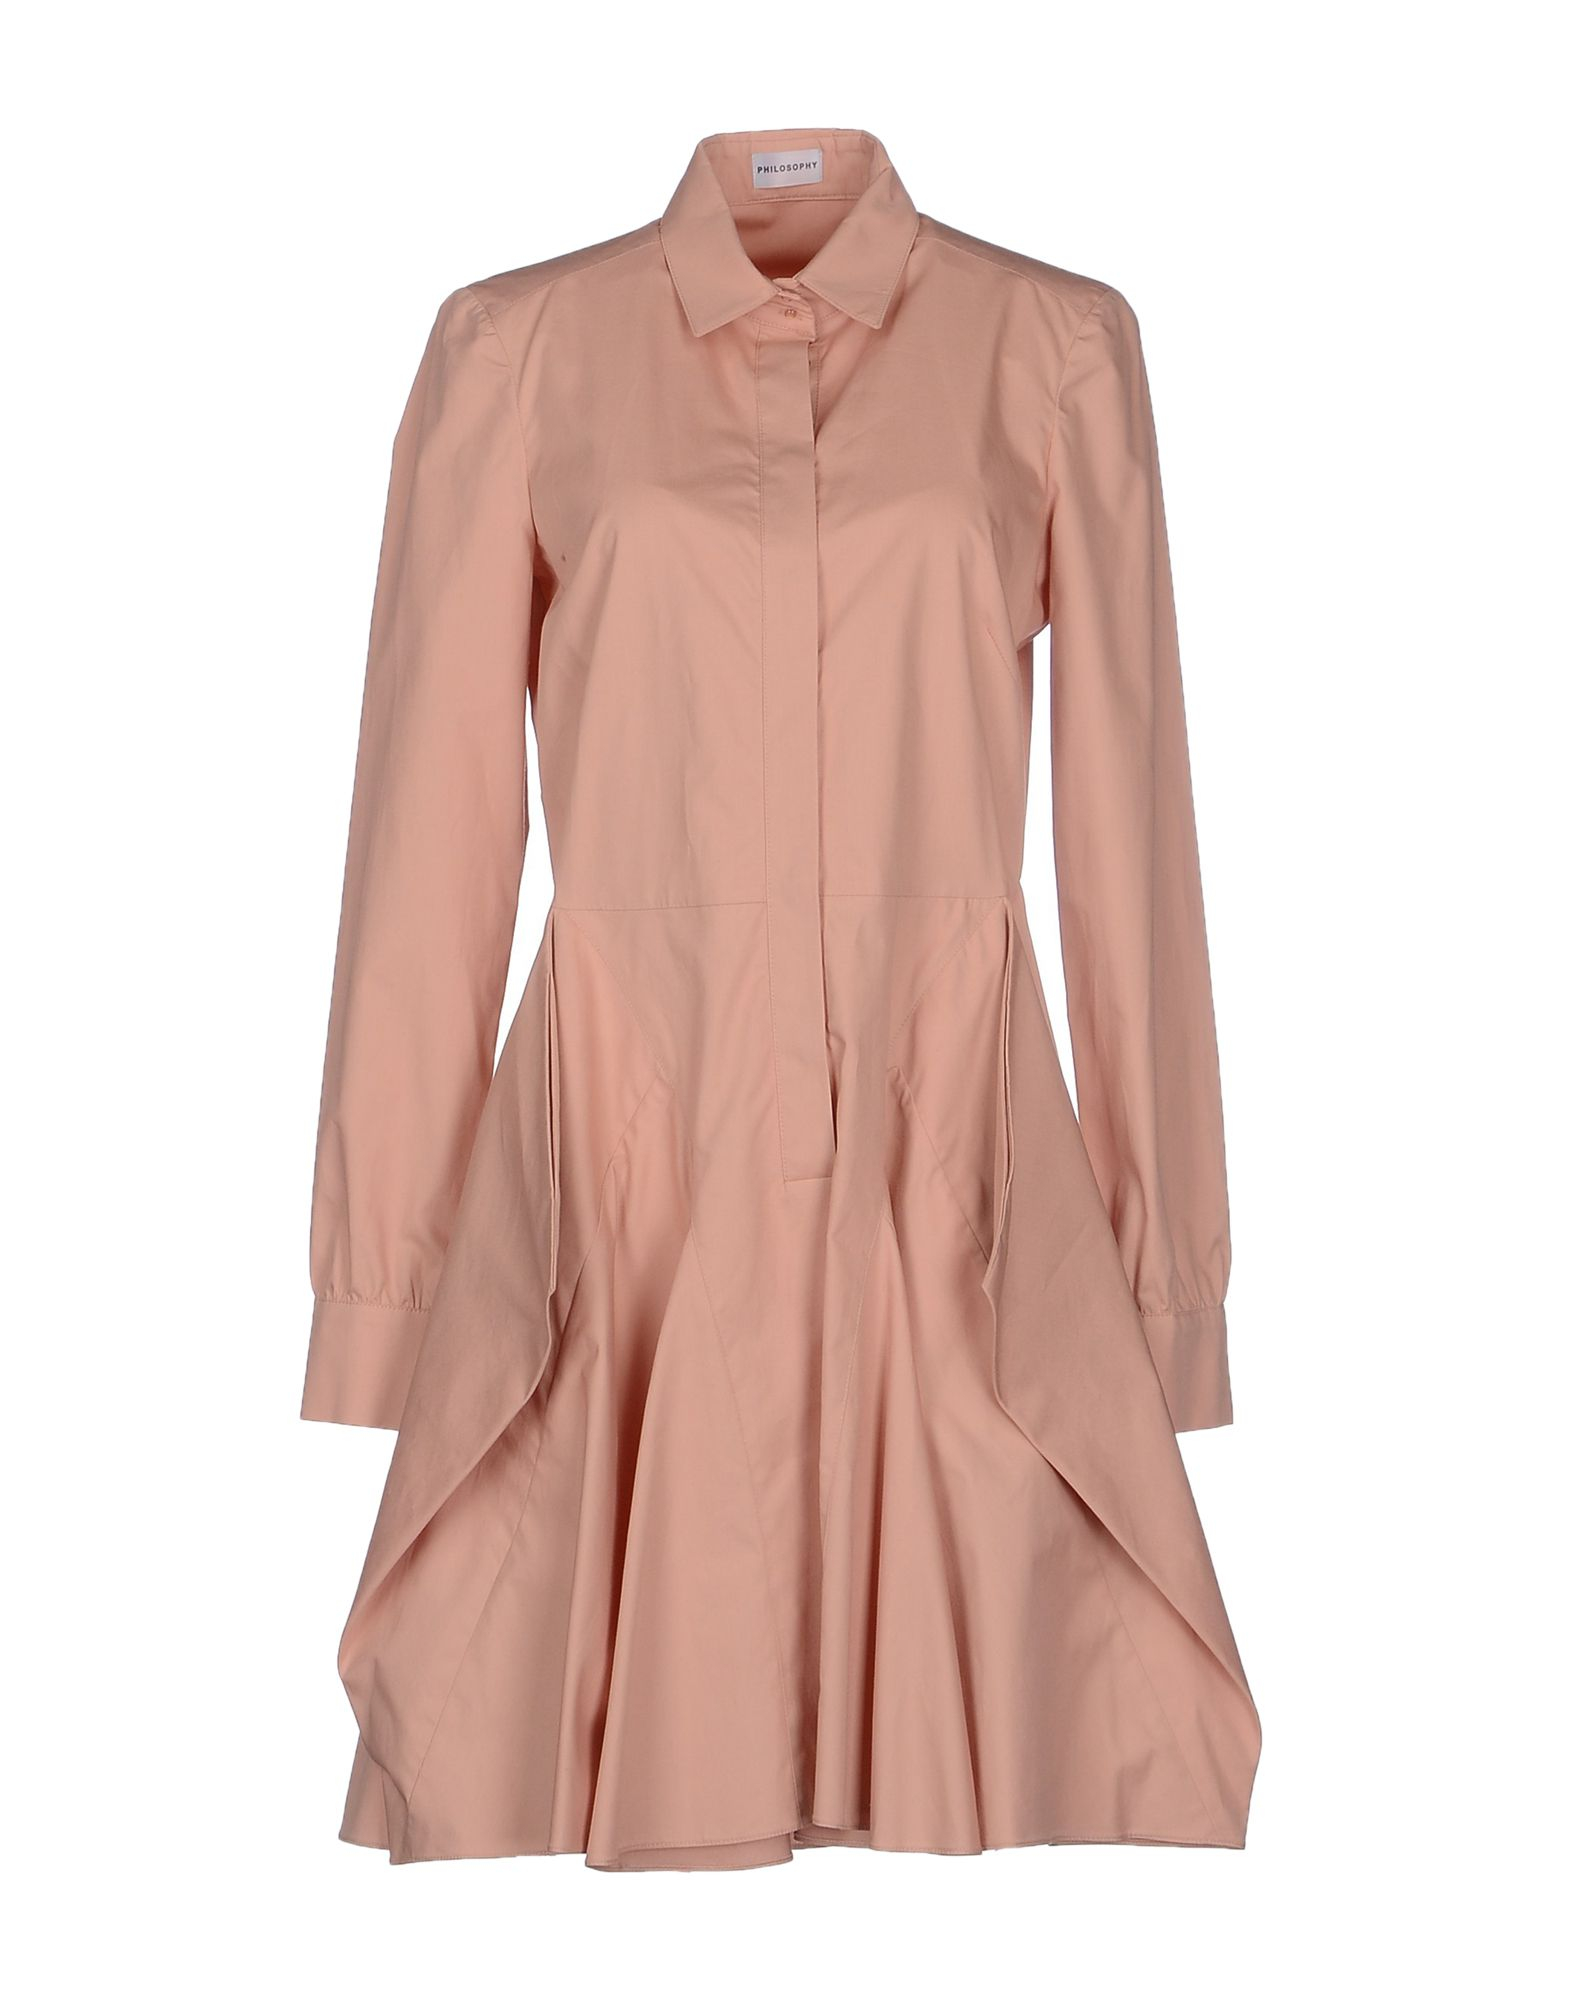 Philosophy di alberta ferretti Short Dress in Pink | Lyst